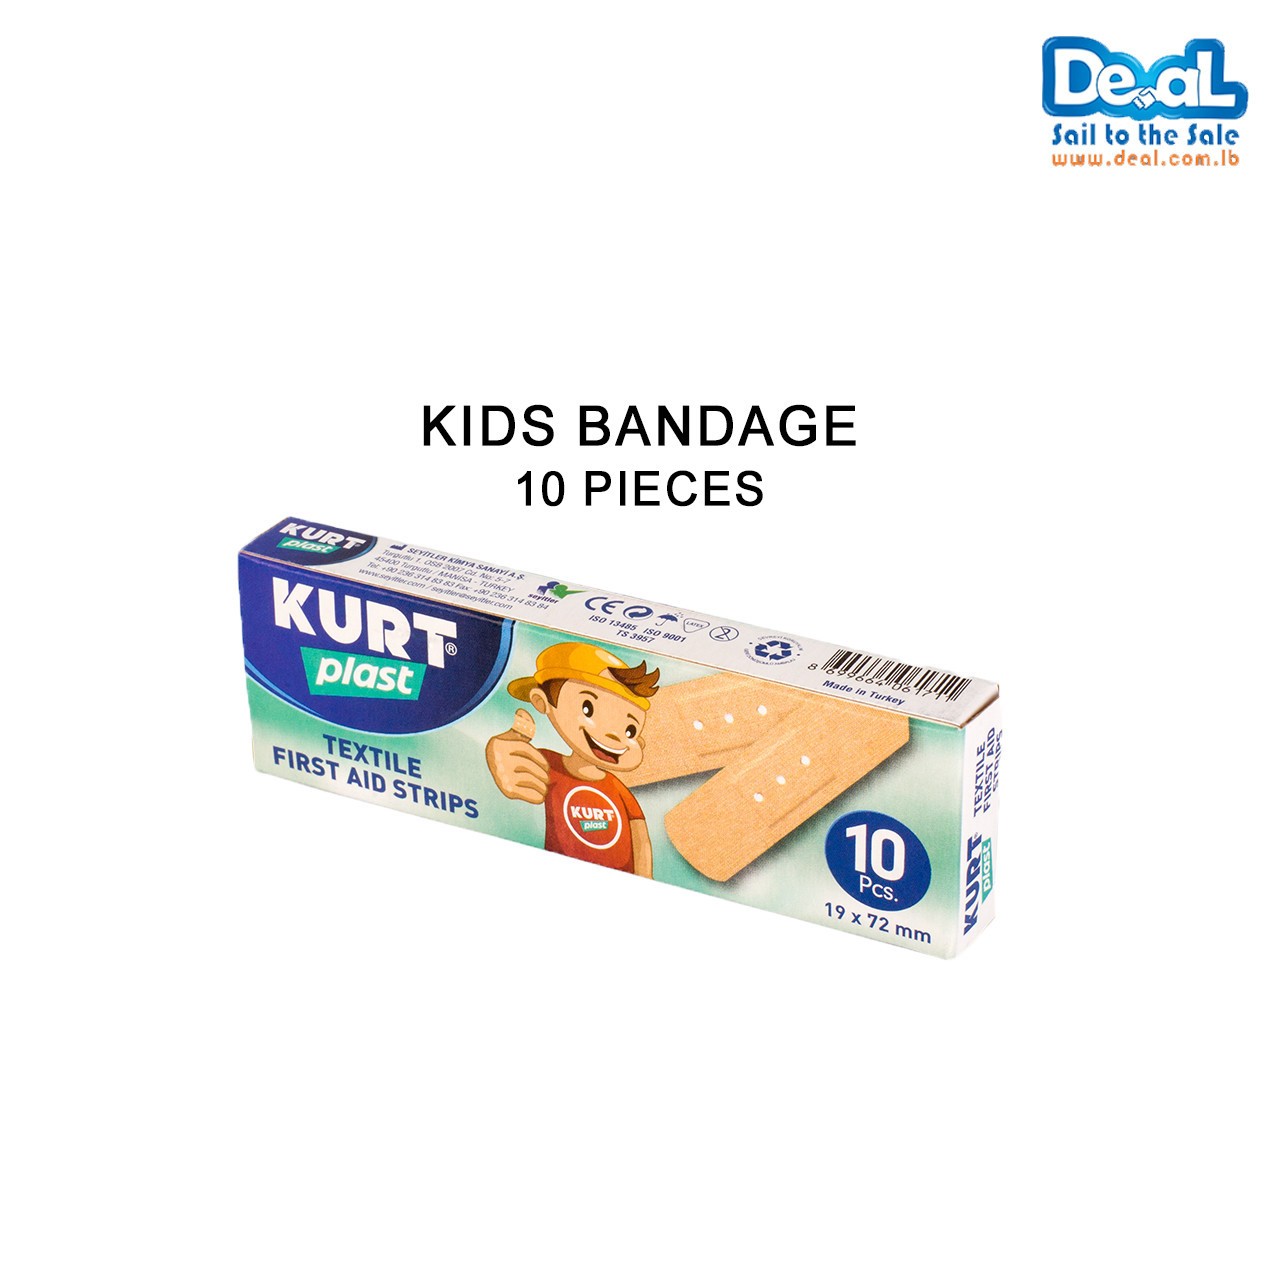 Kids+Bandage+10pcs+19%2A72mm